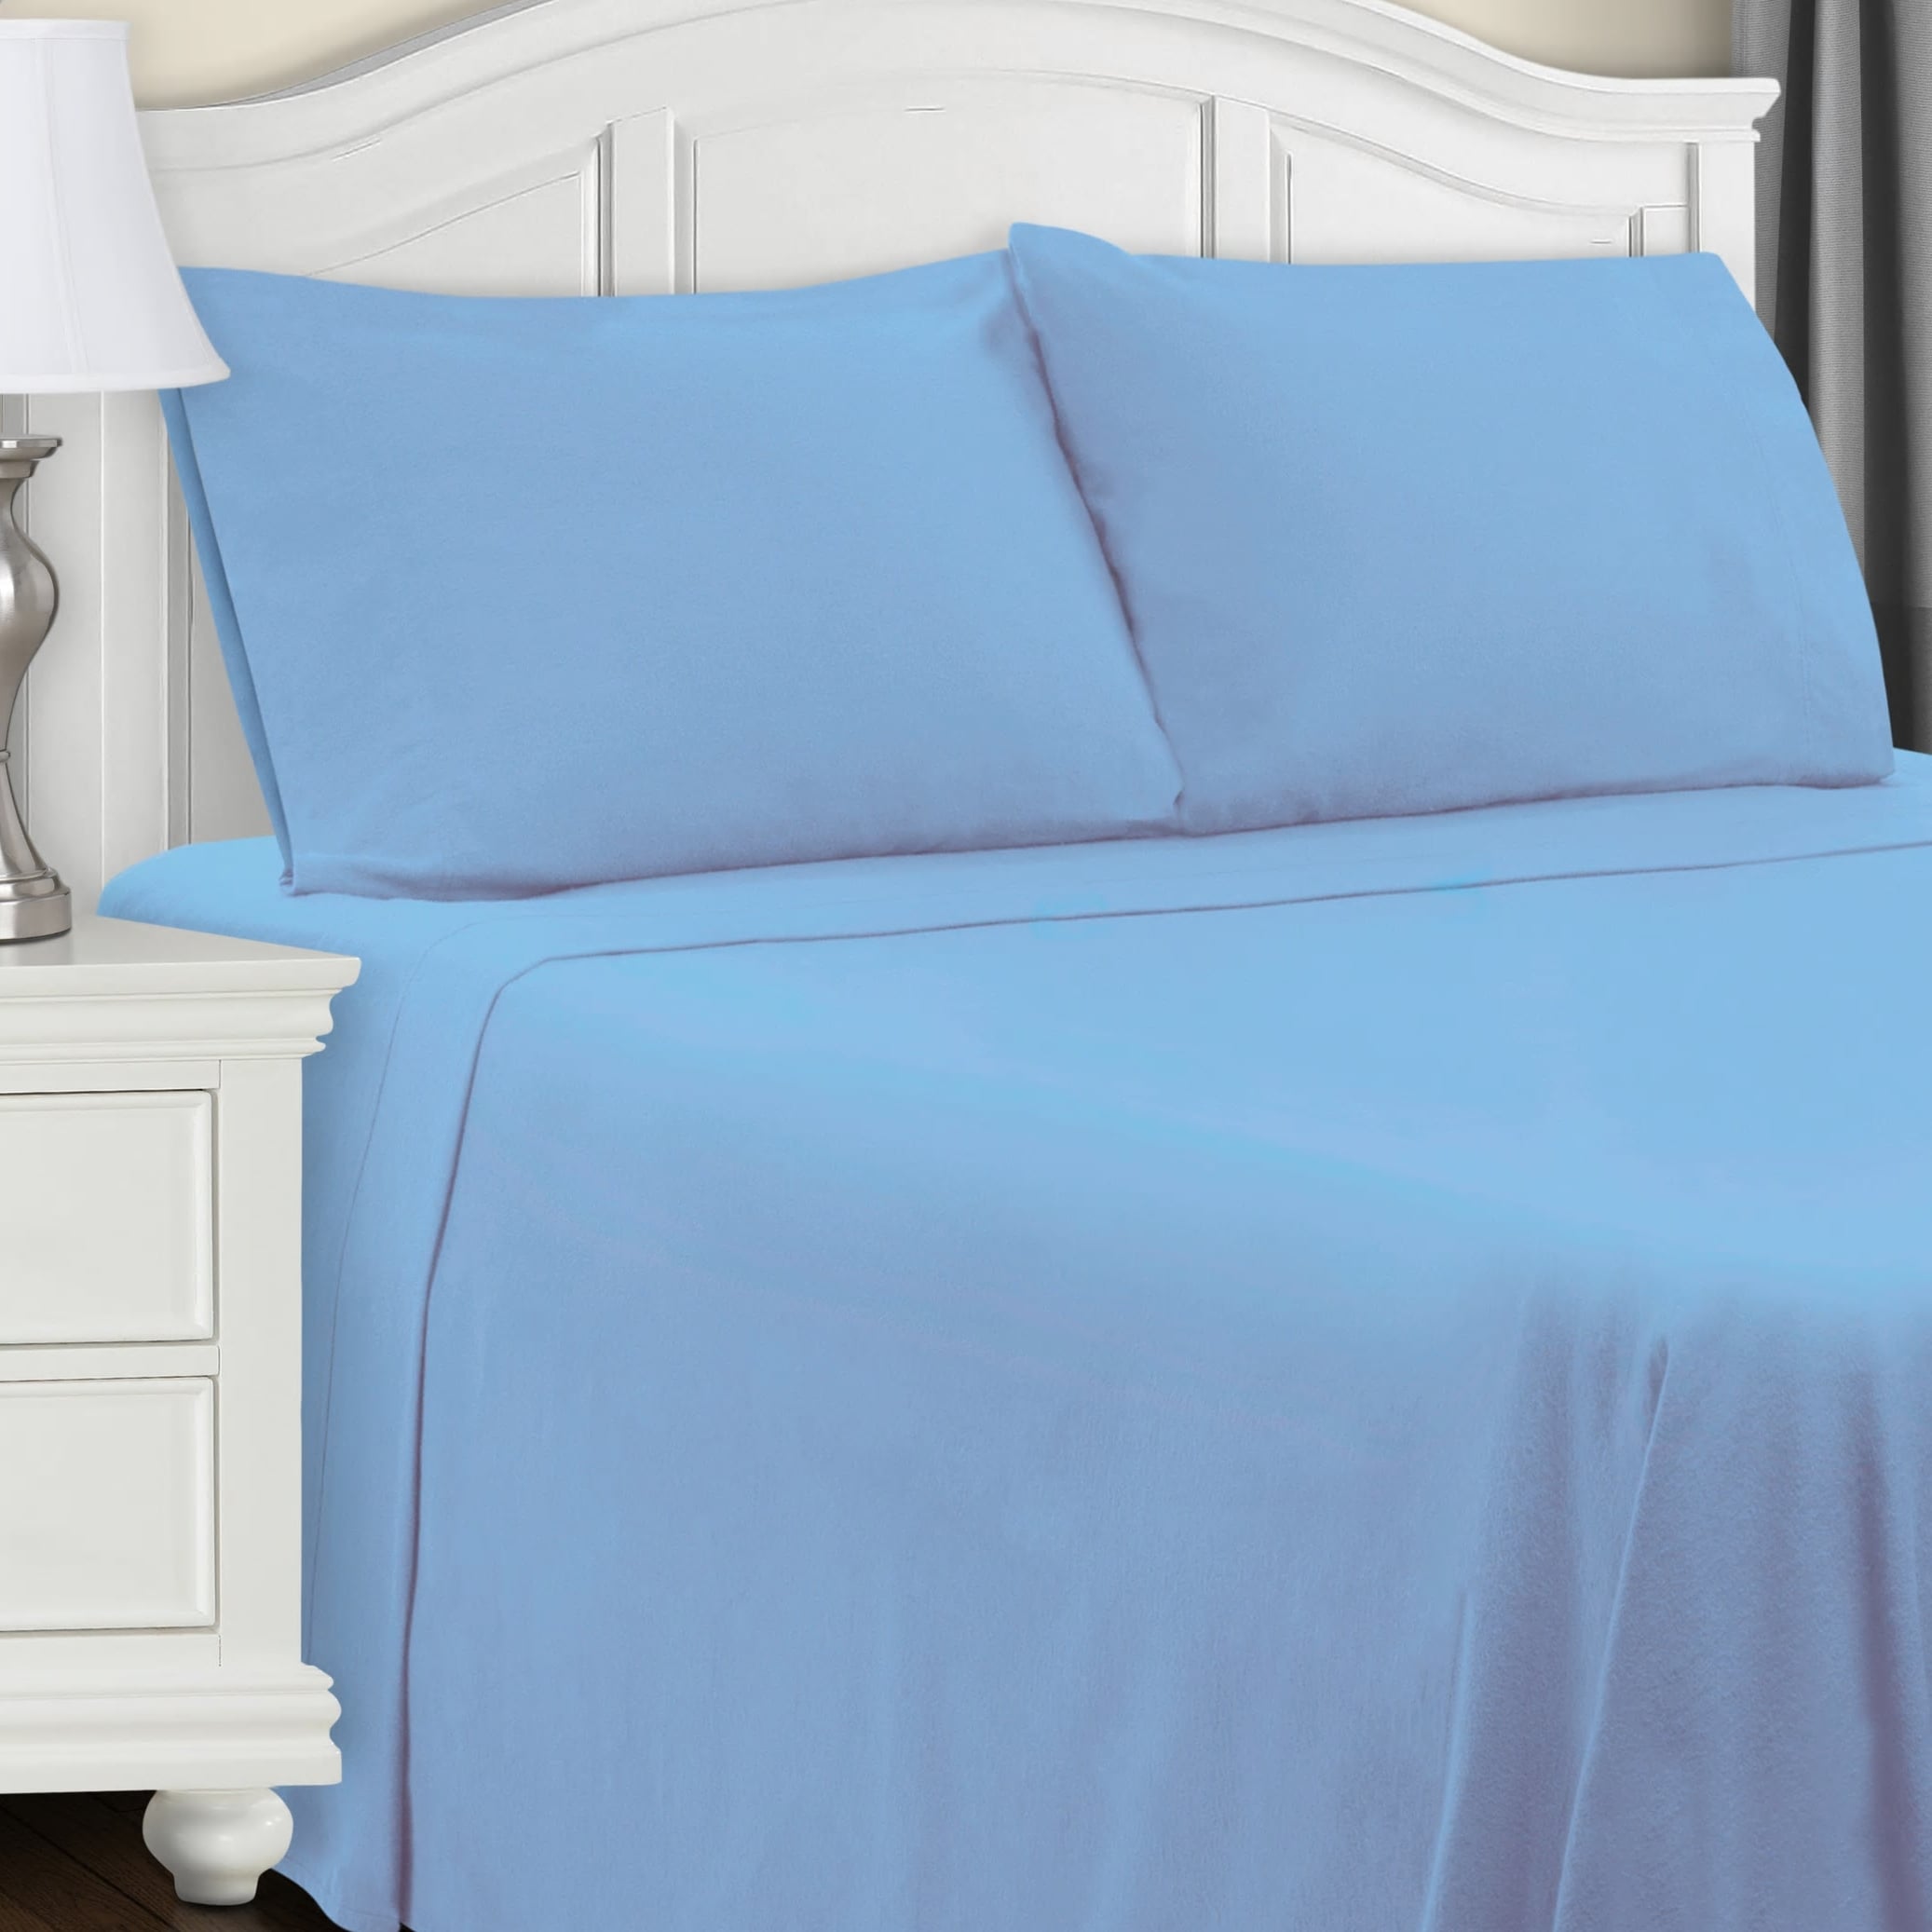 KING SIZE BED FLANNELETTE SHEET SET WAVE BLUE ORANGE RETRO 100% COTTON WARM SOFT 